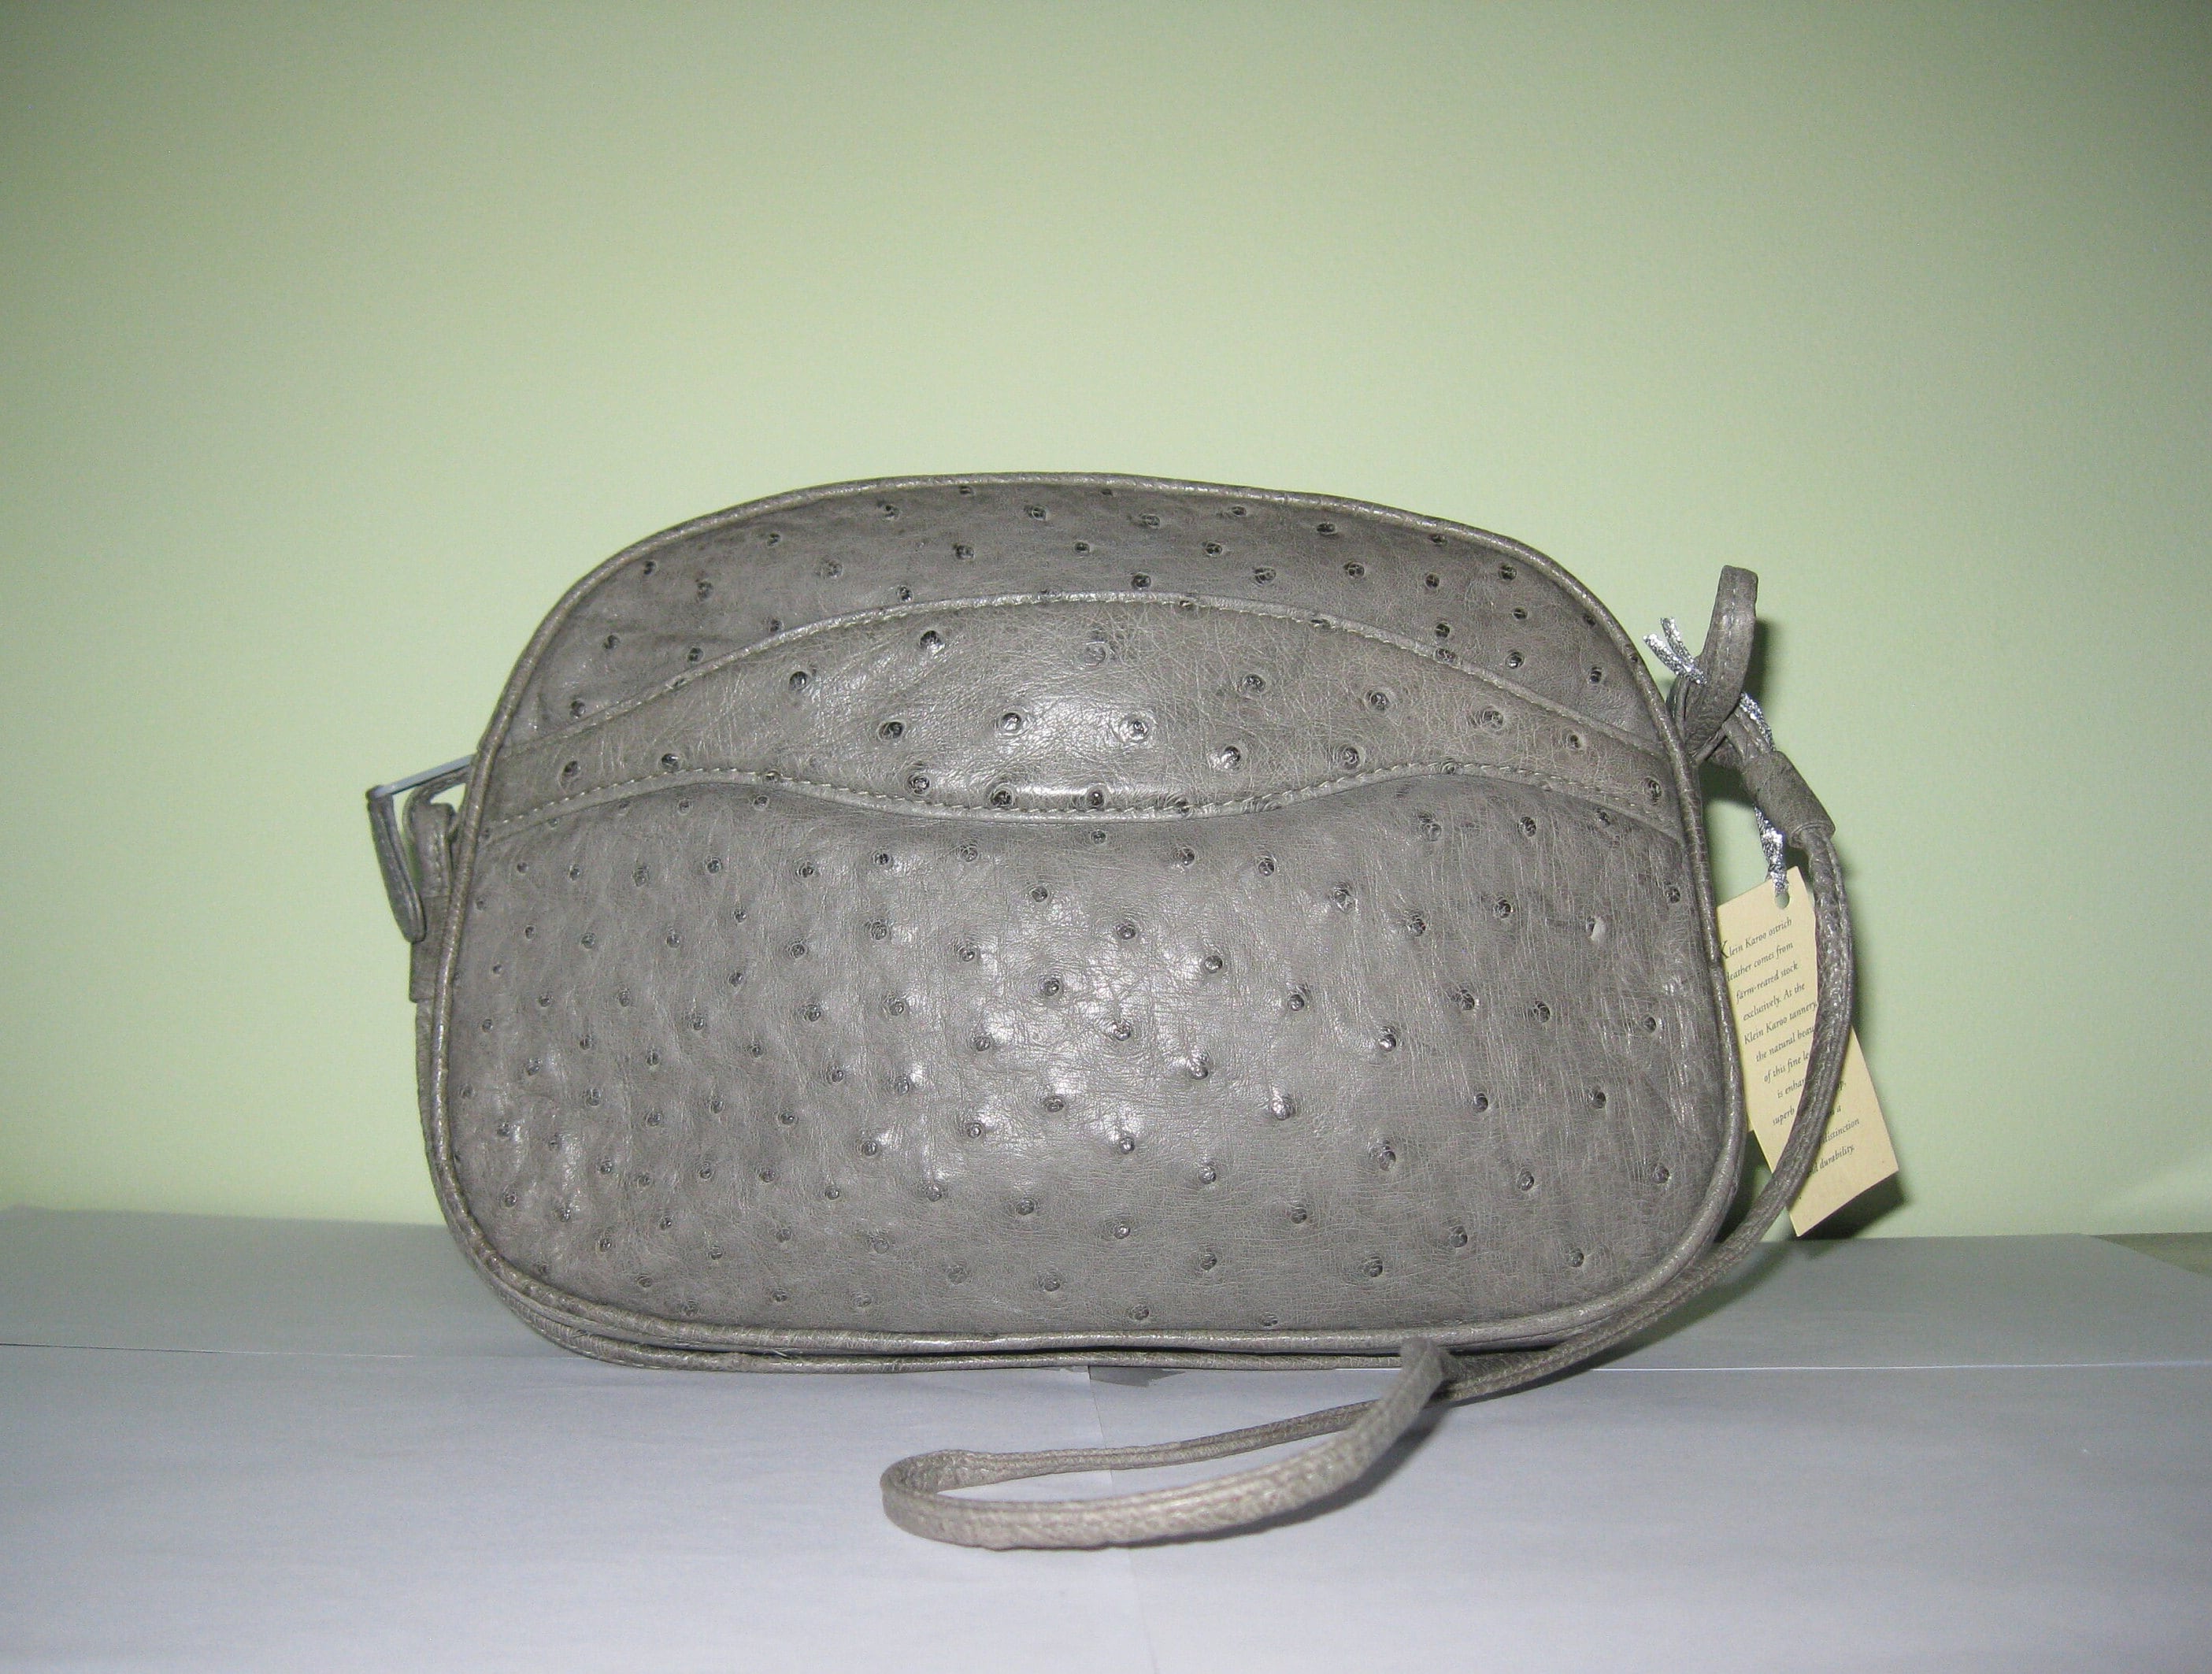 Vintage 1950s Brown Ostrich Leather Handbag by Riviera Bag. 